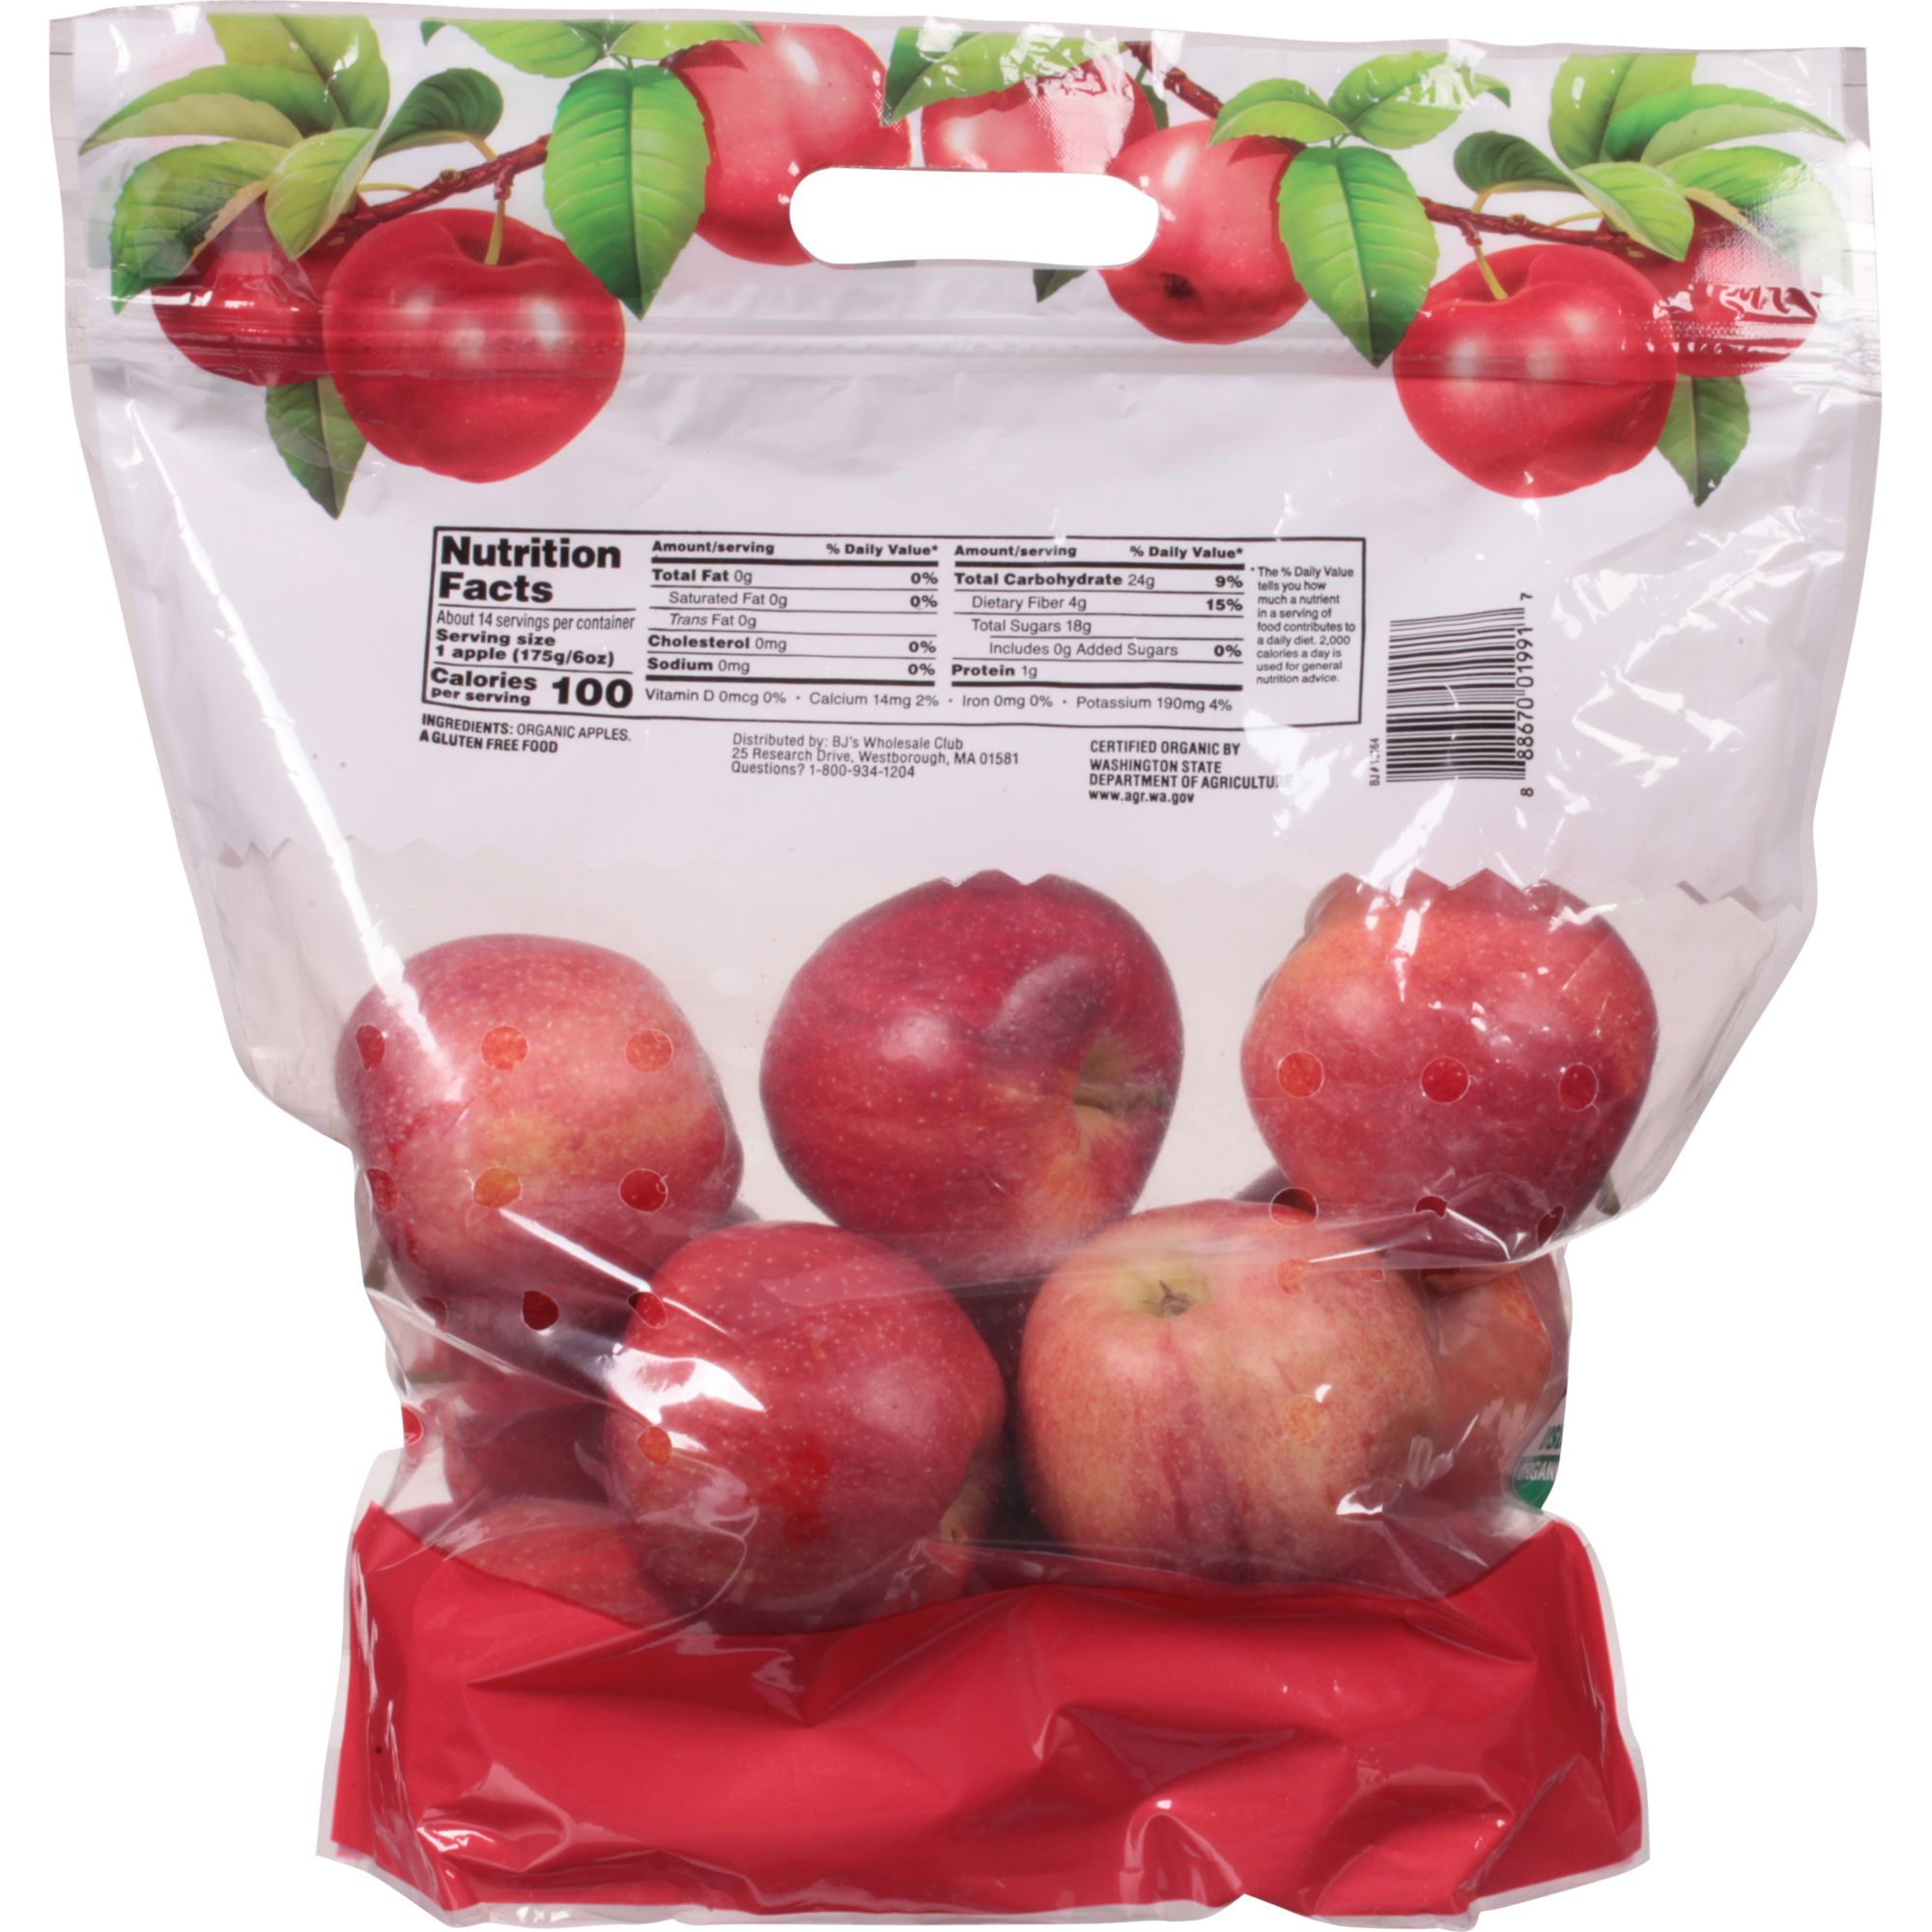 Organic Large Fuji Apples - 5ct